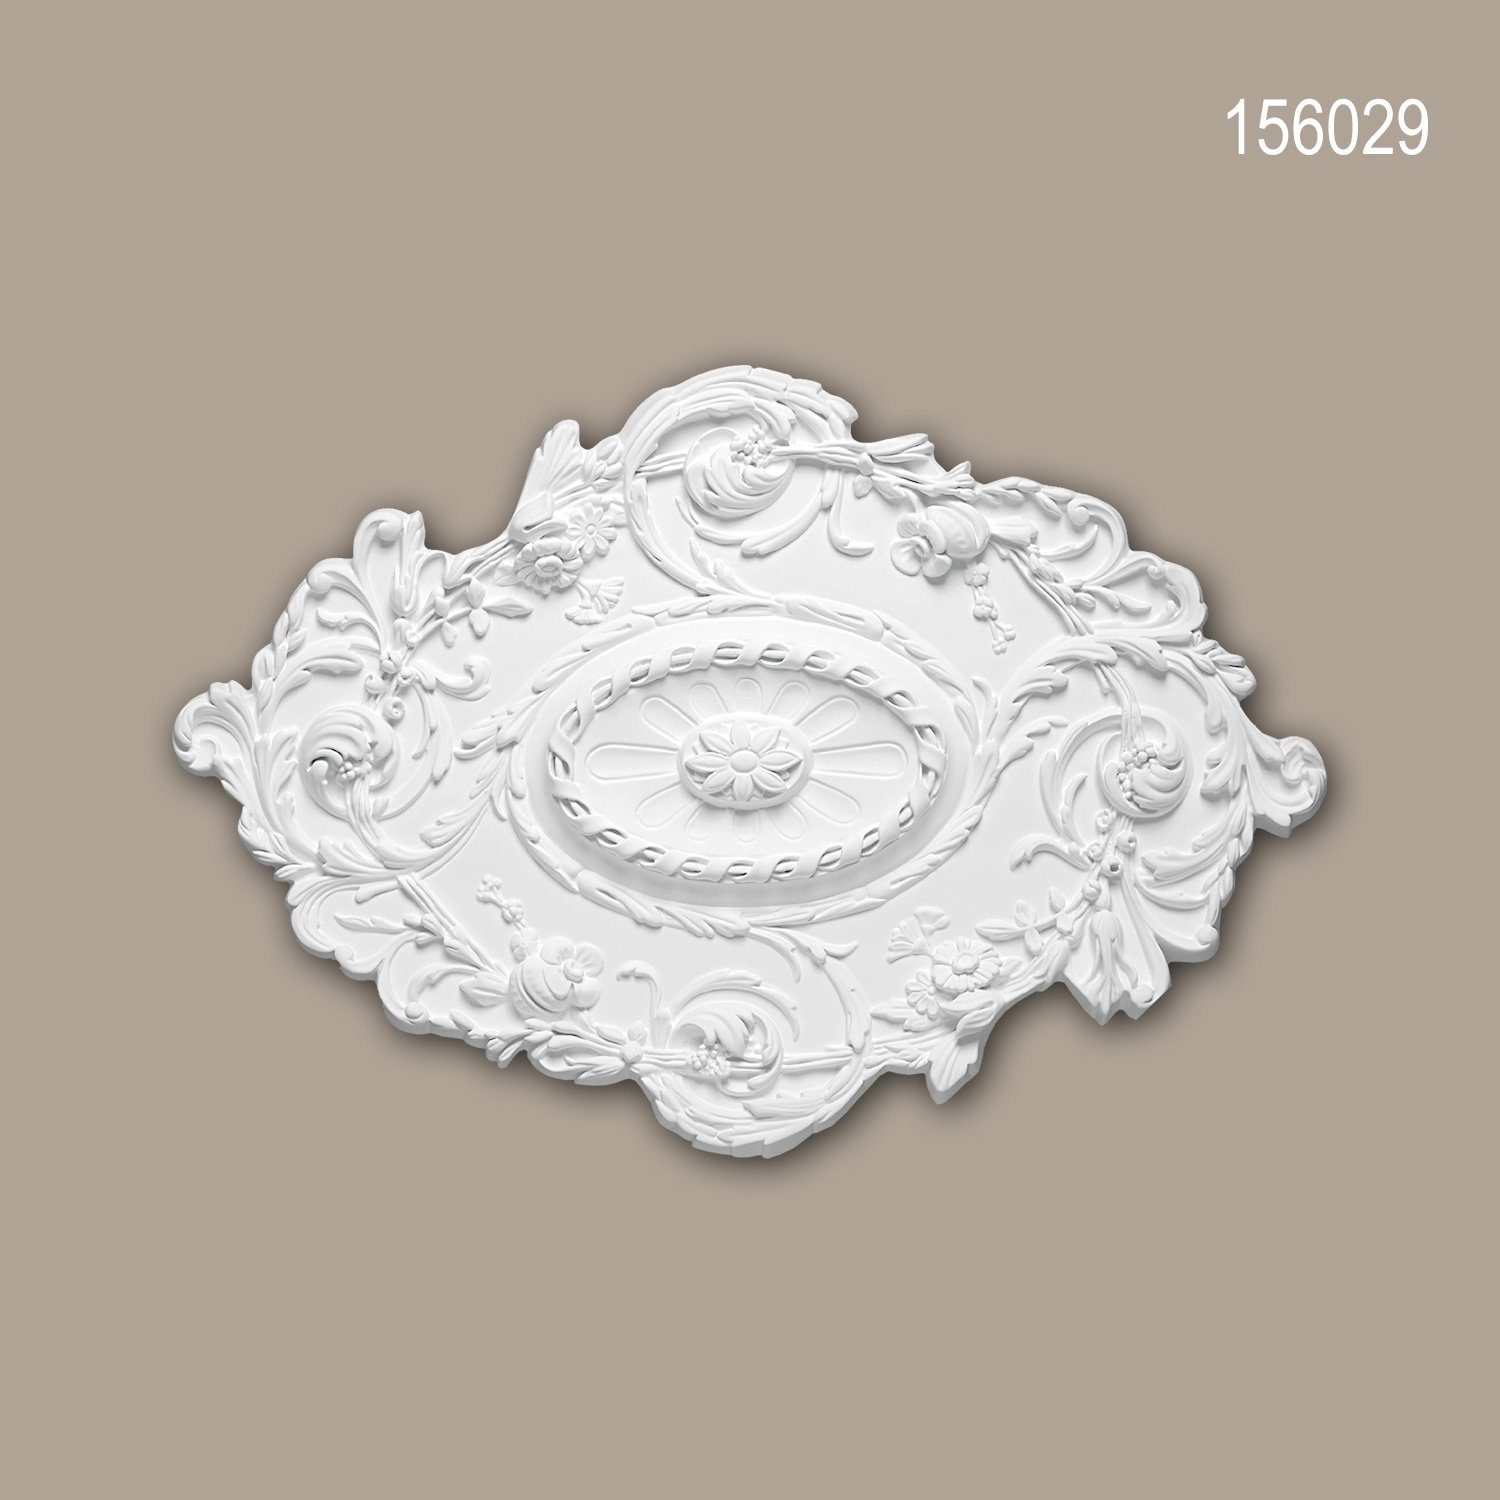 Profhome Decken-Rosette 156029 (Rosette, 1 St., Deckenrosette, Medallion, Stuckrosette, Deckenelement, Zierelement, 76,7 x 53,2 cm), weiß, vorgrundiert, Stil: Rokoko / Barock